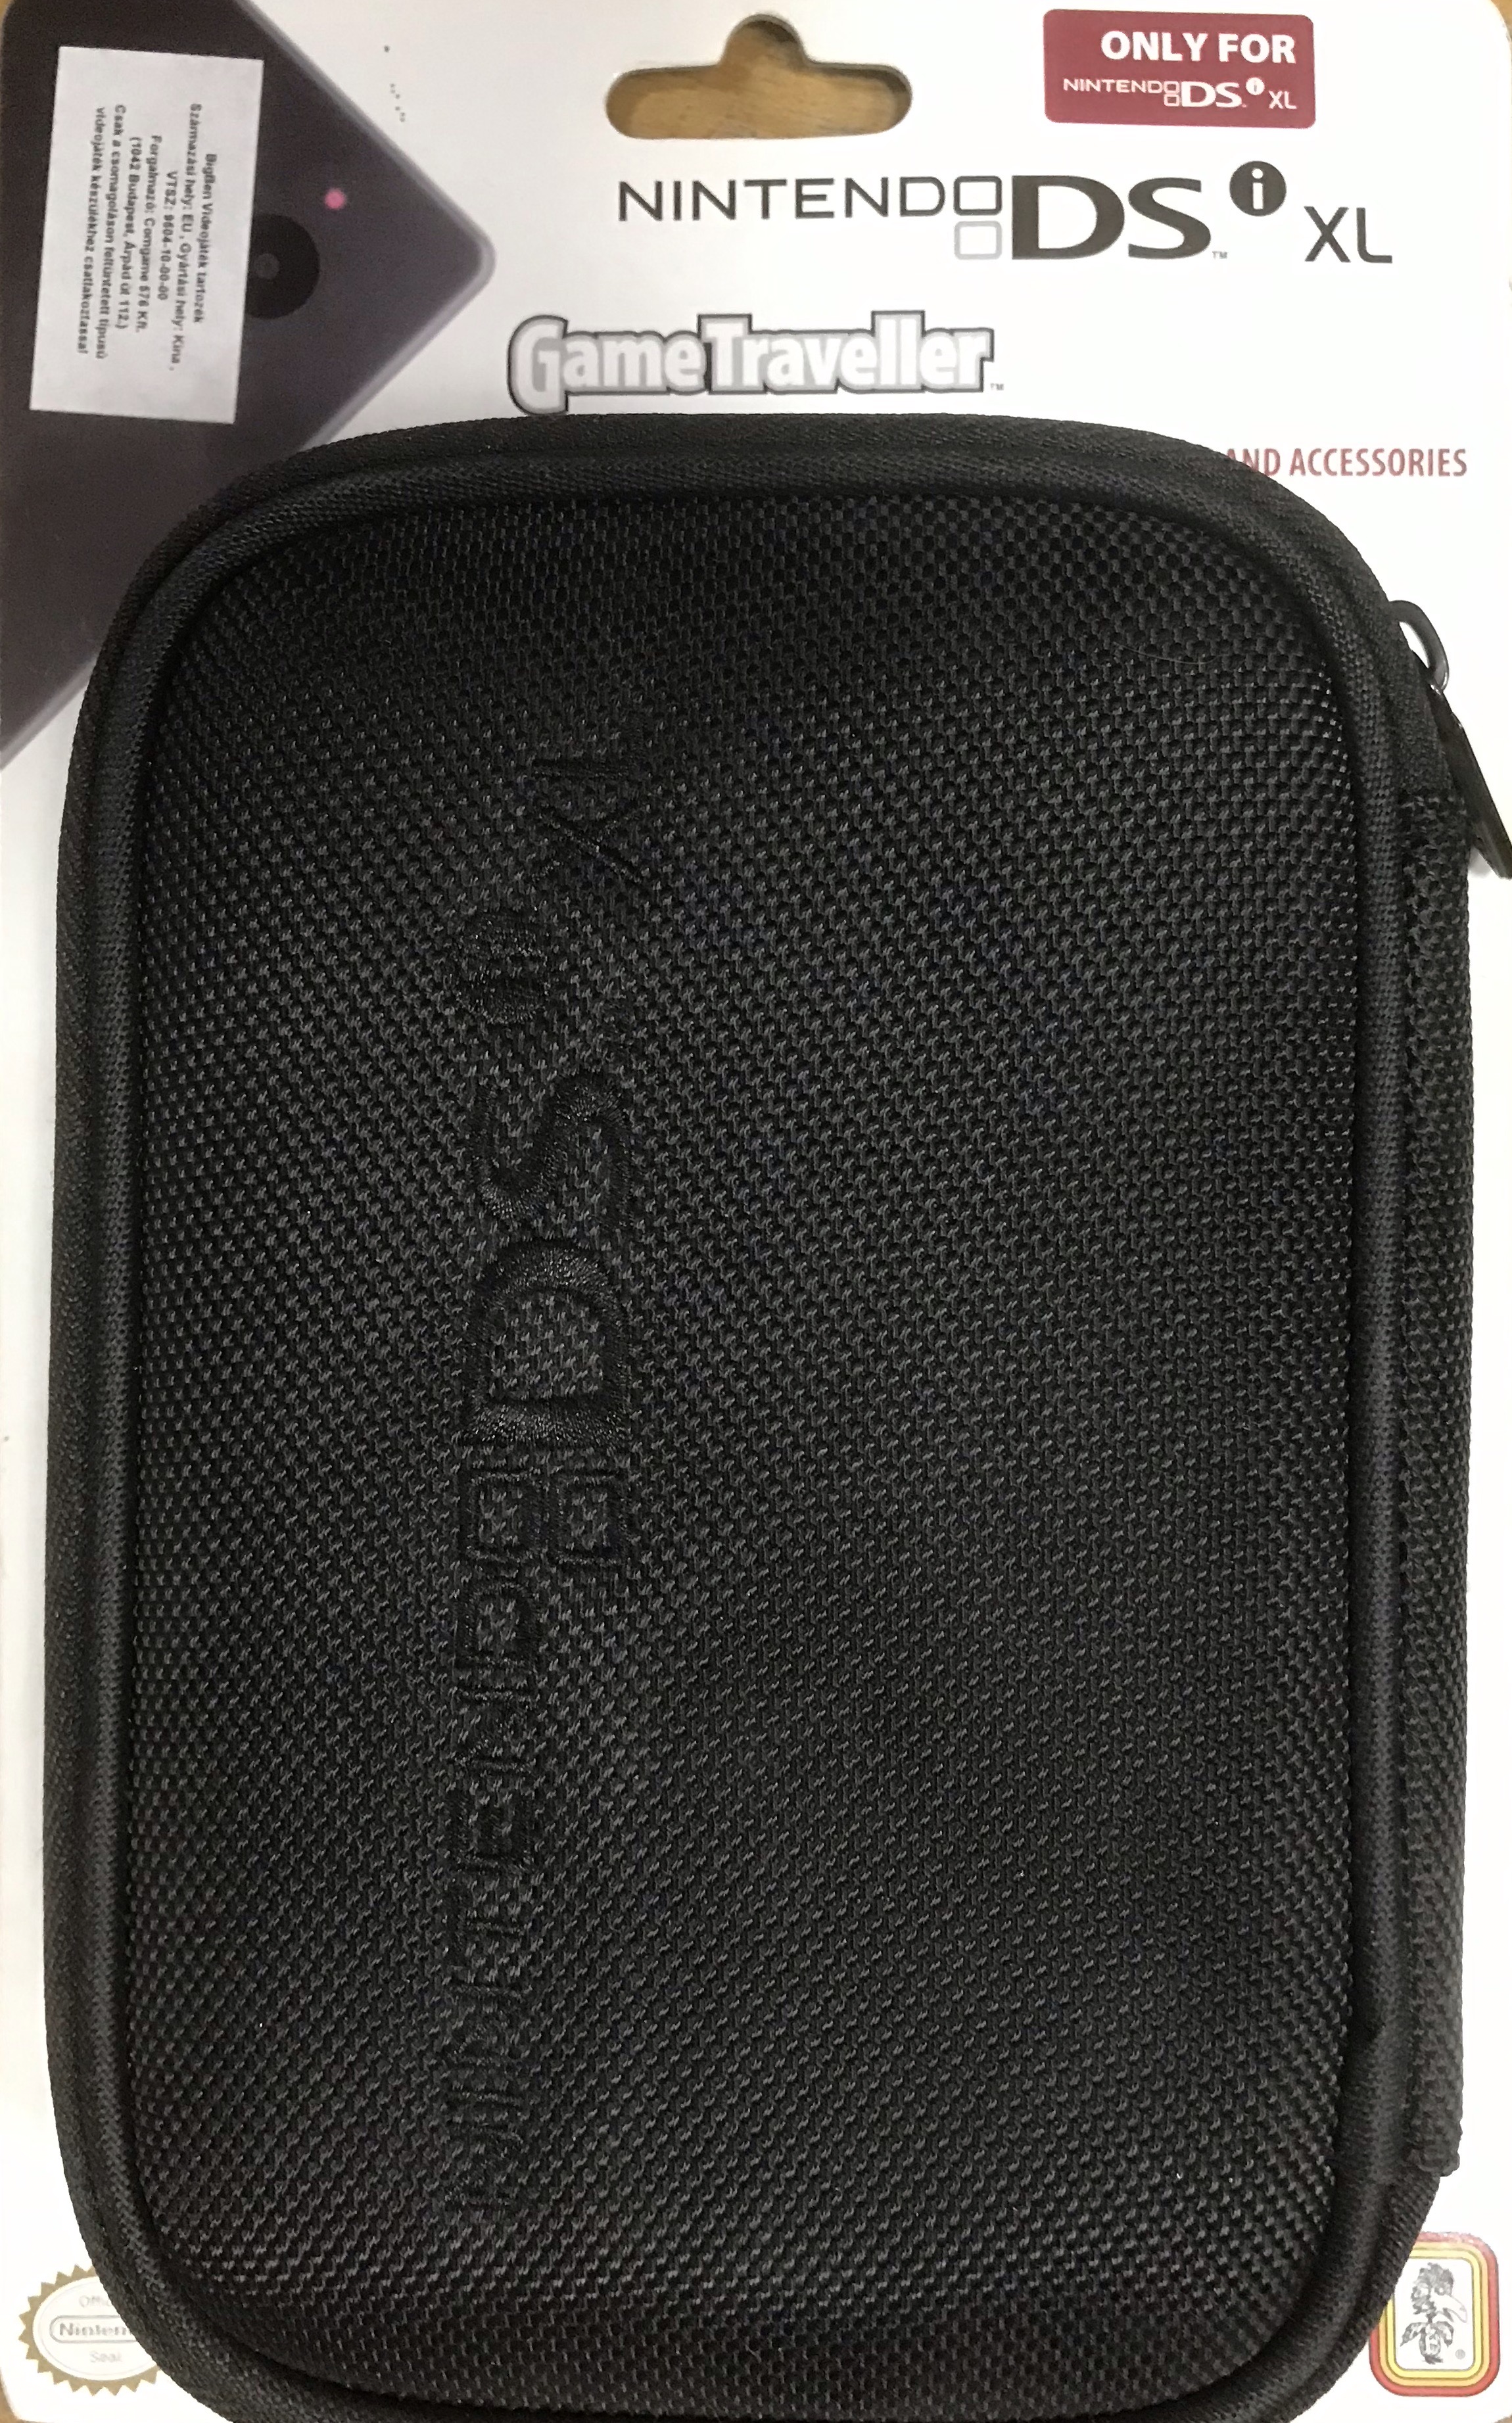 Nintendo DS XL Game Traveller (Fekete)